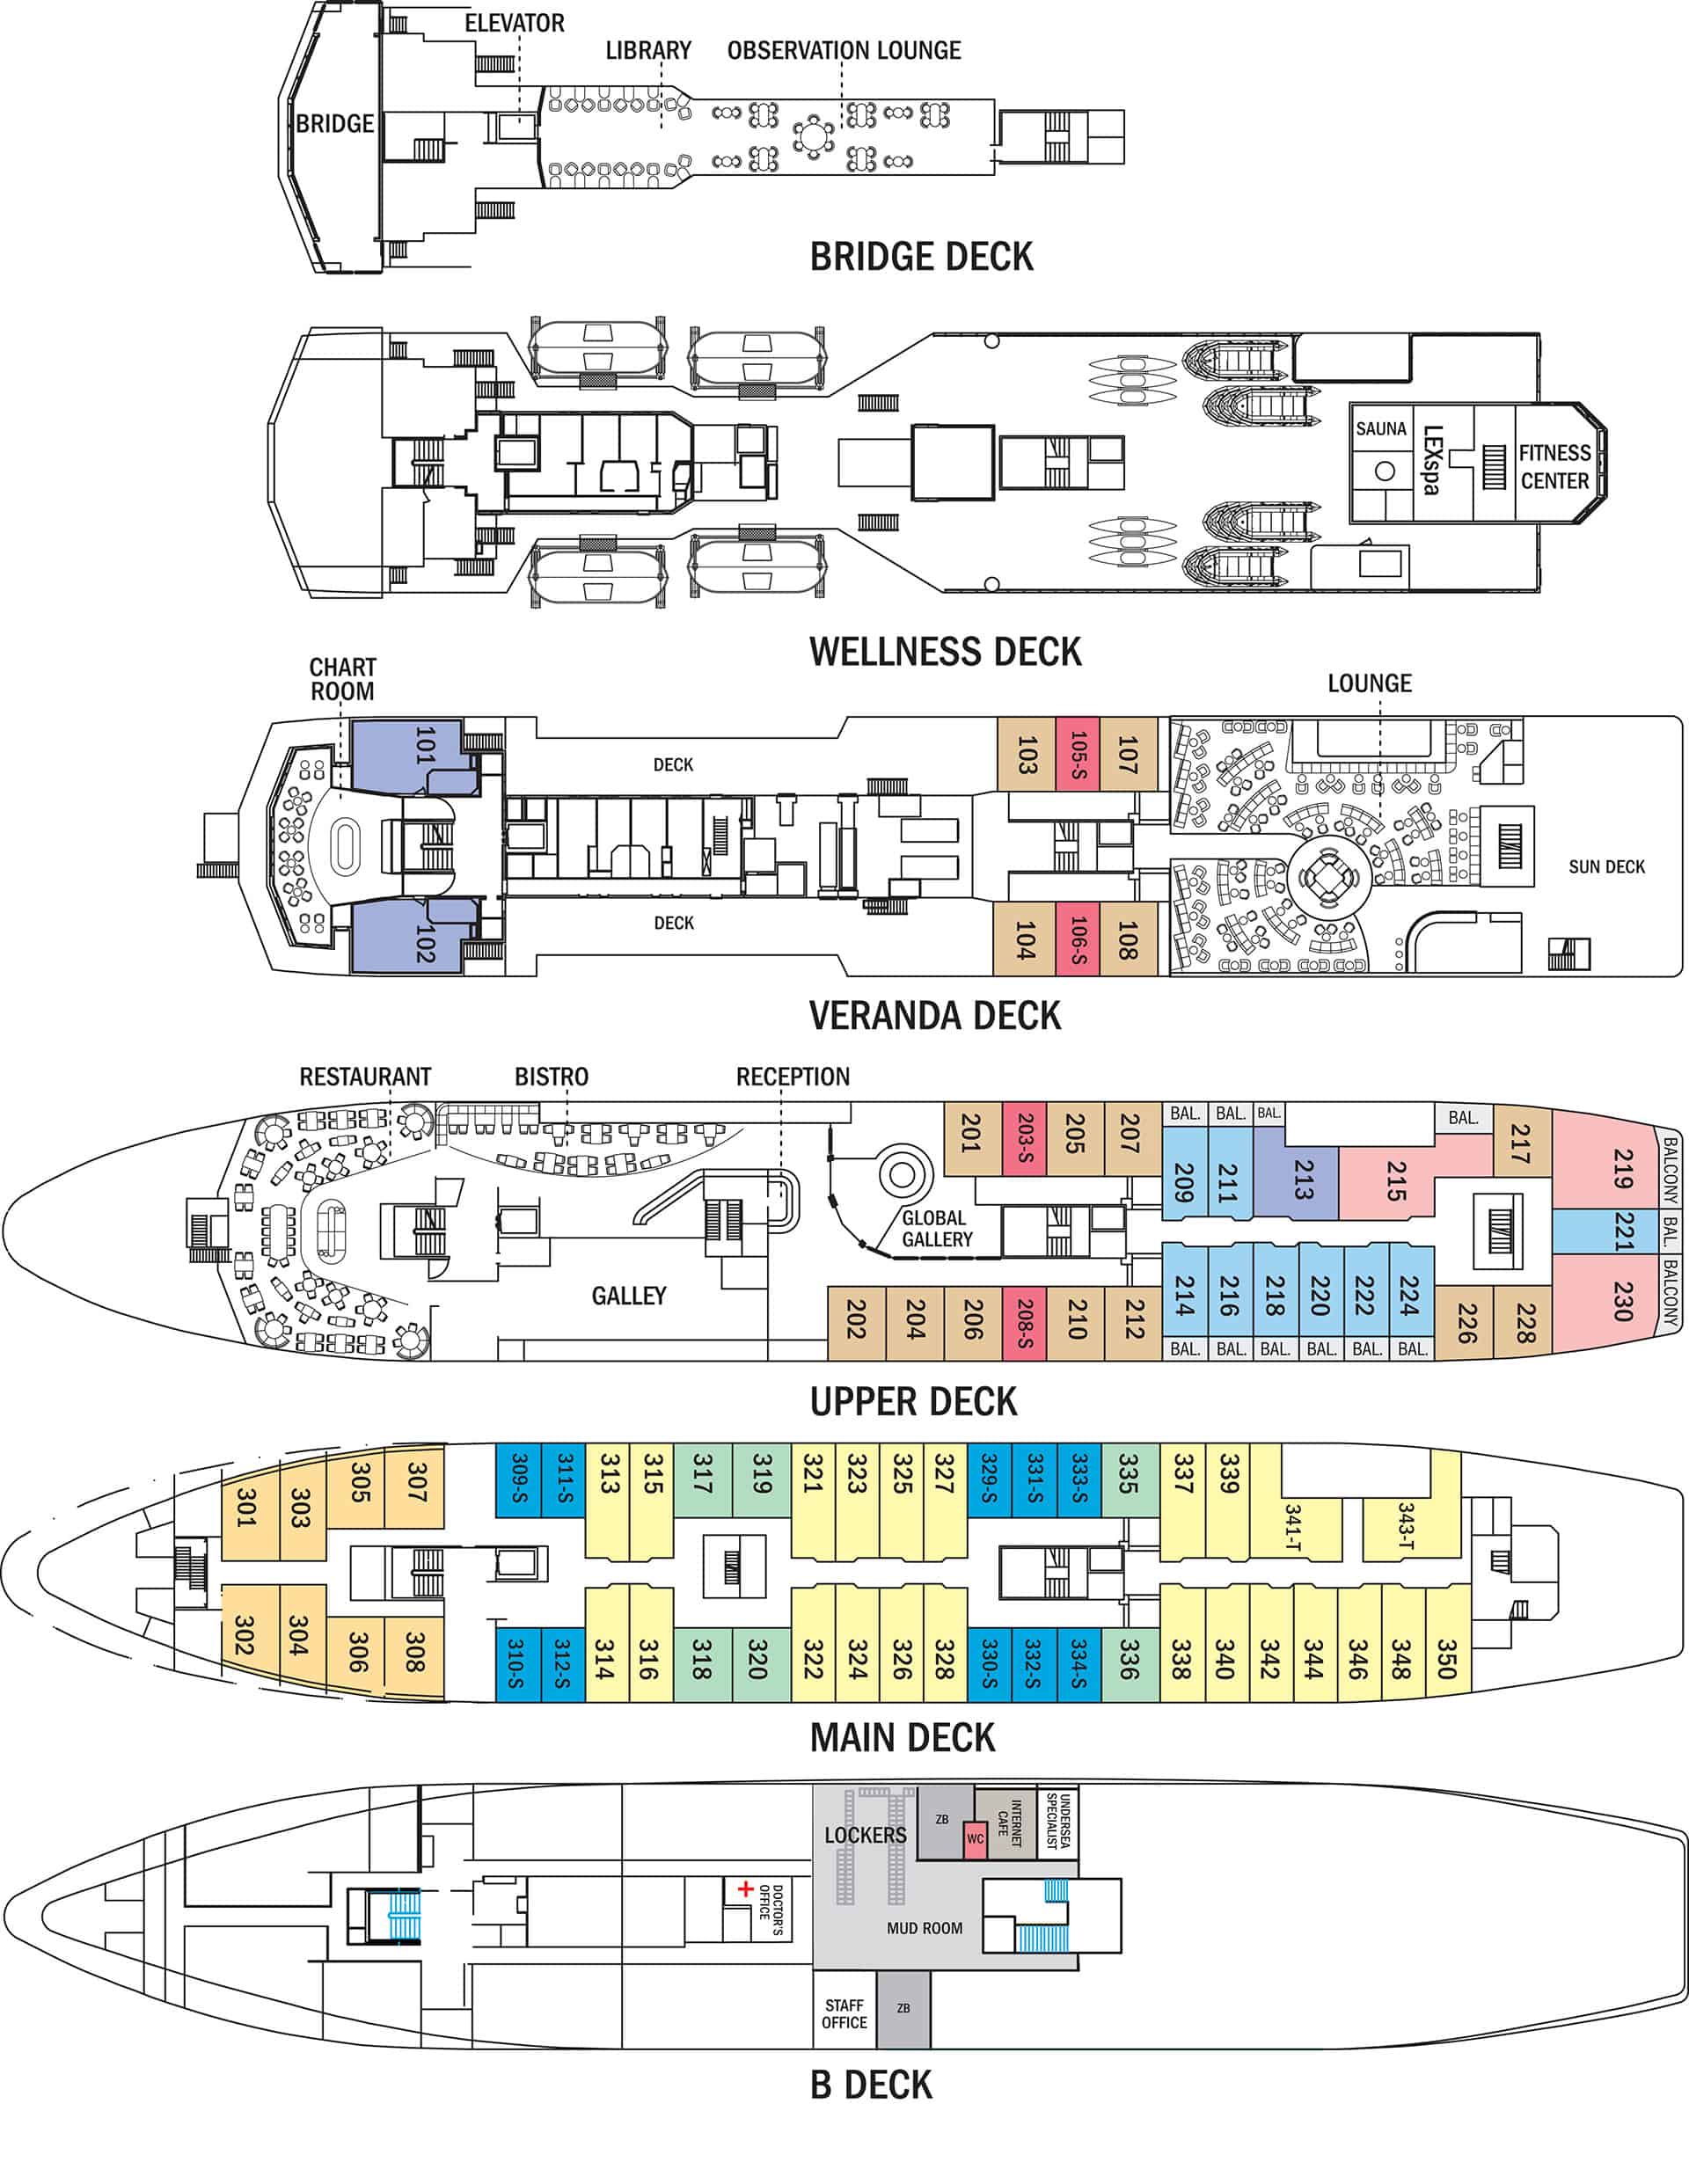 Deck plan detailing B Deck, Main Deck, Upper Deck, Veranda Deck, Wellness Deck and Bridge Deck of National Geographic Explorer polar expedition ship